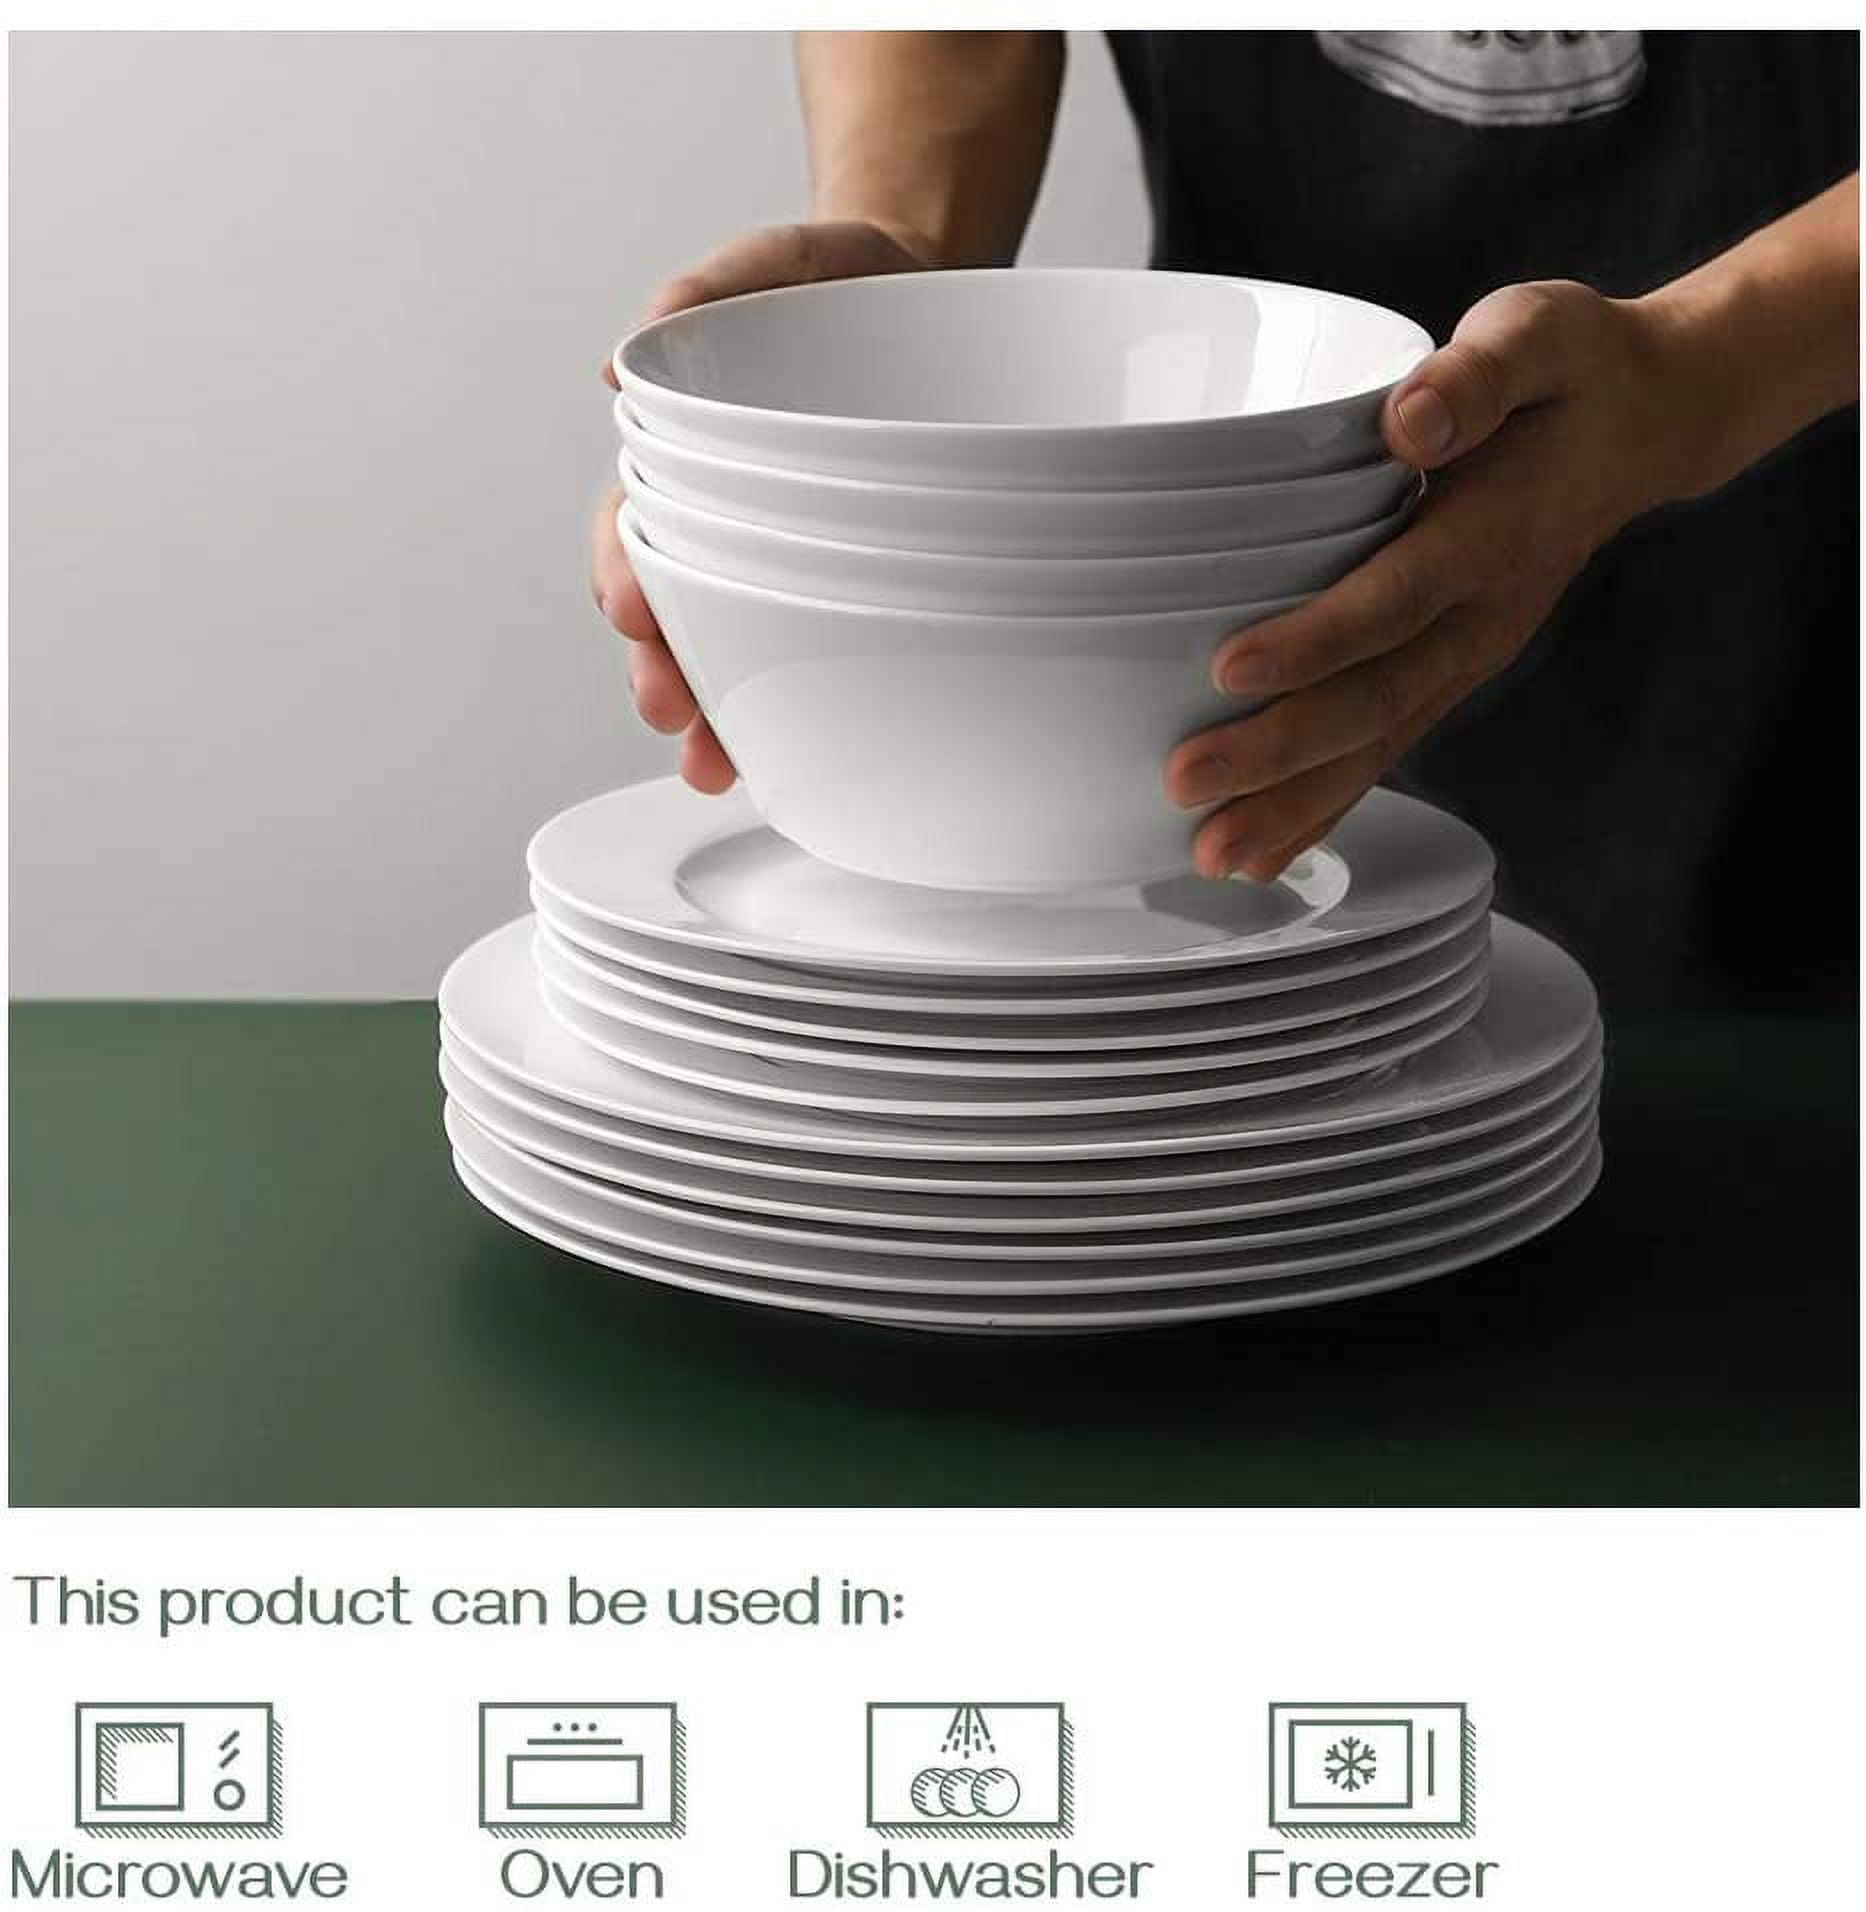 Generic DOWAN Ceramic Bowls with Lids, Serving Bowls with Lids, Food  Storage Container, Porcelain Prep Bowl